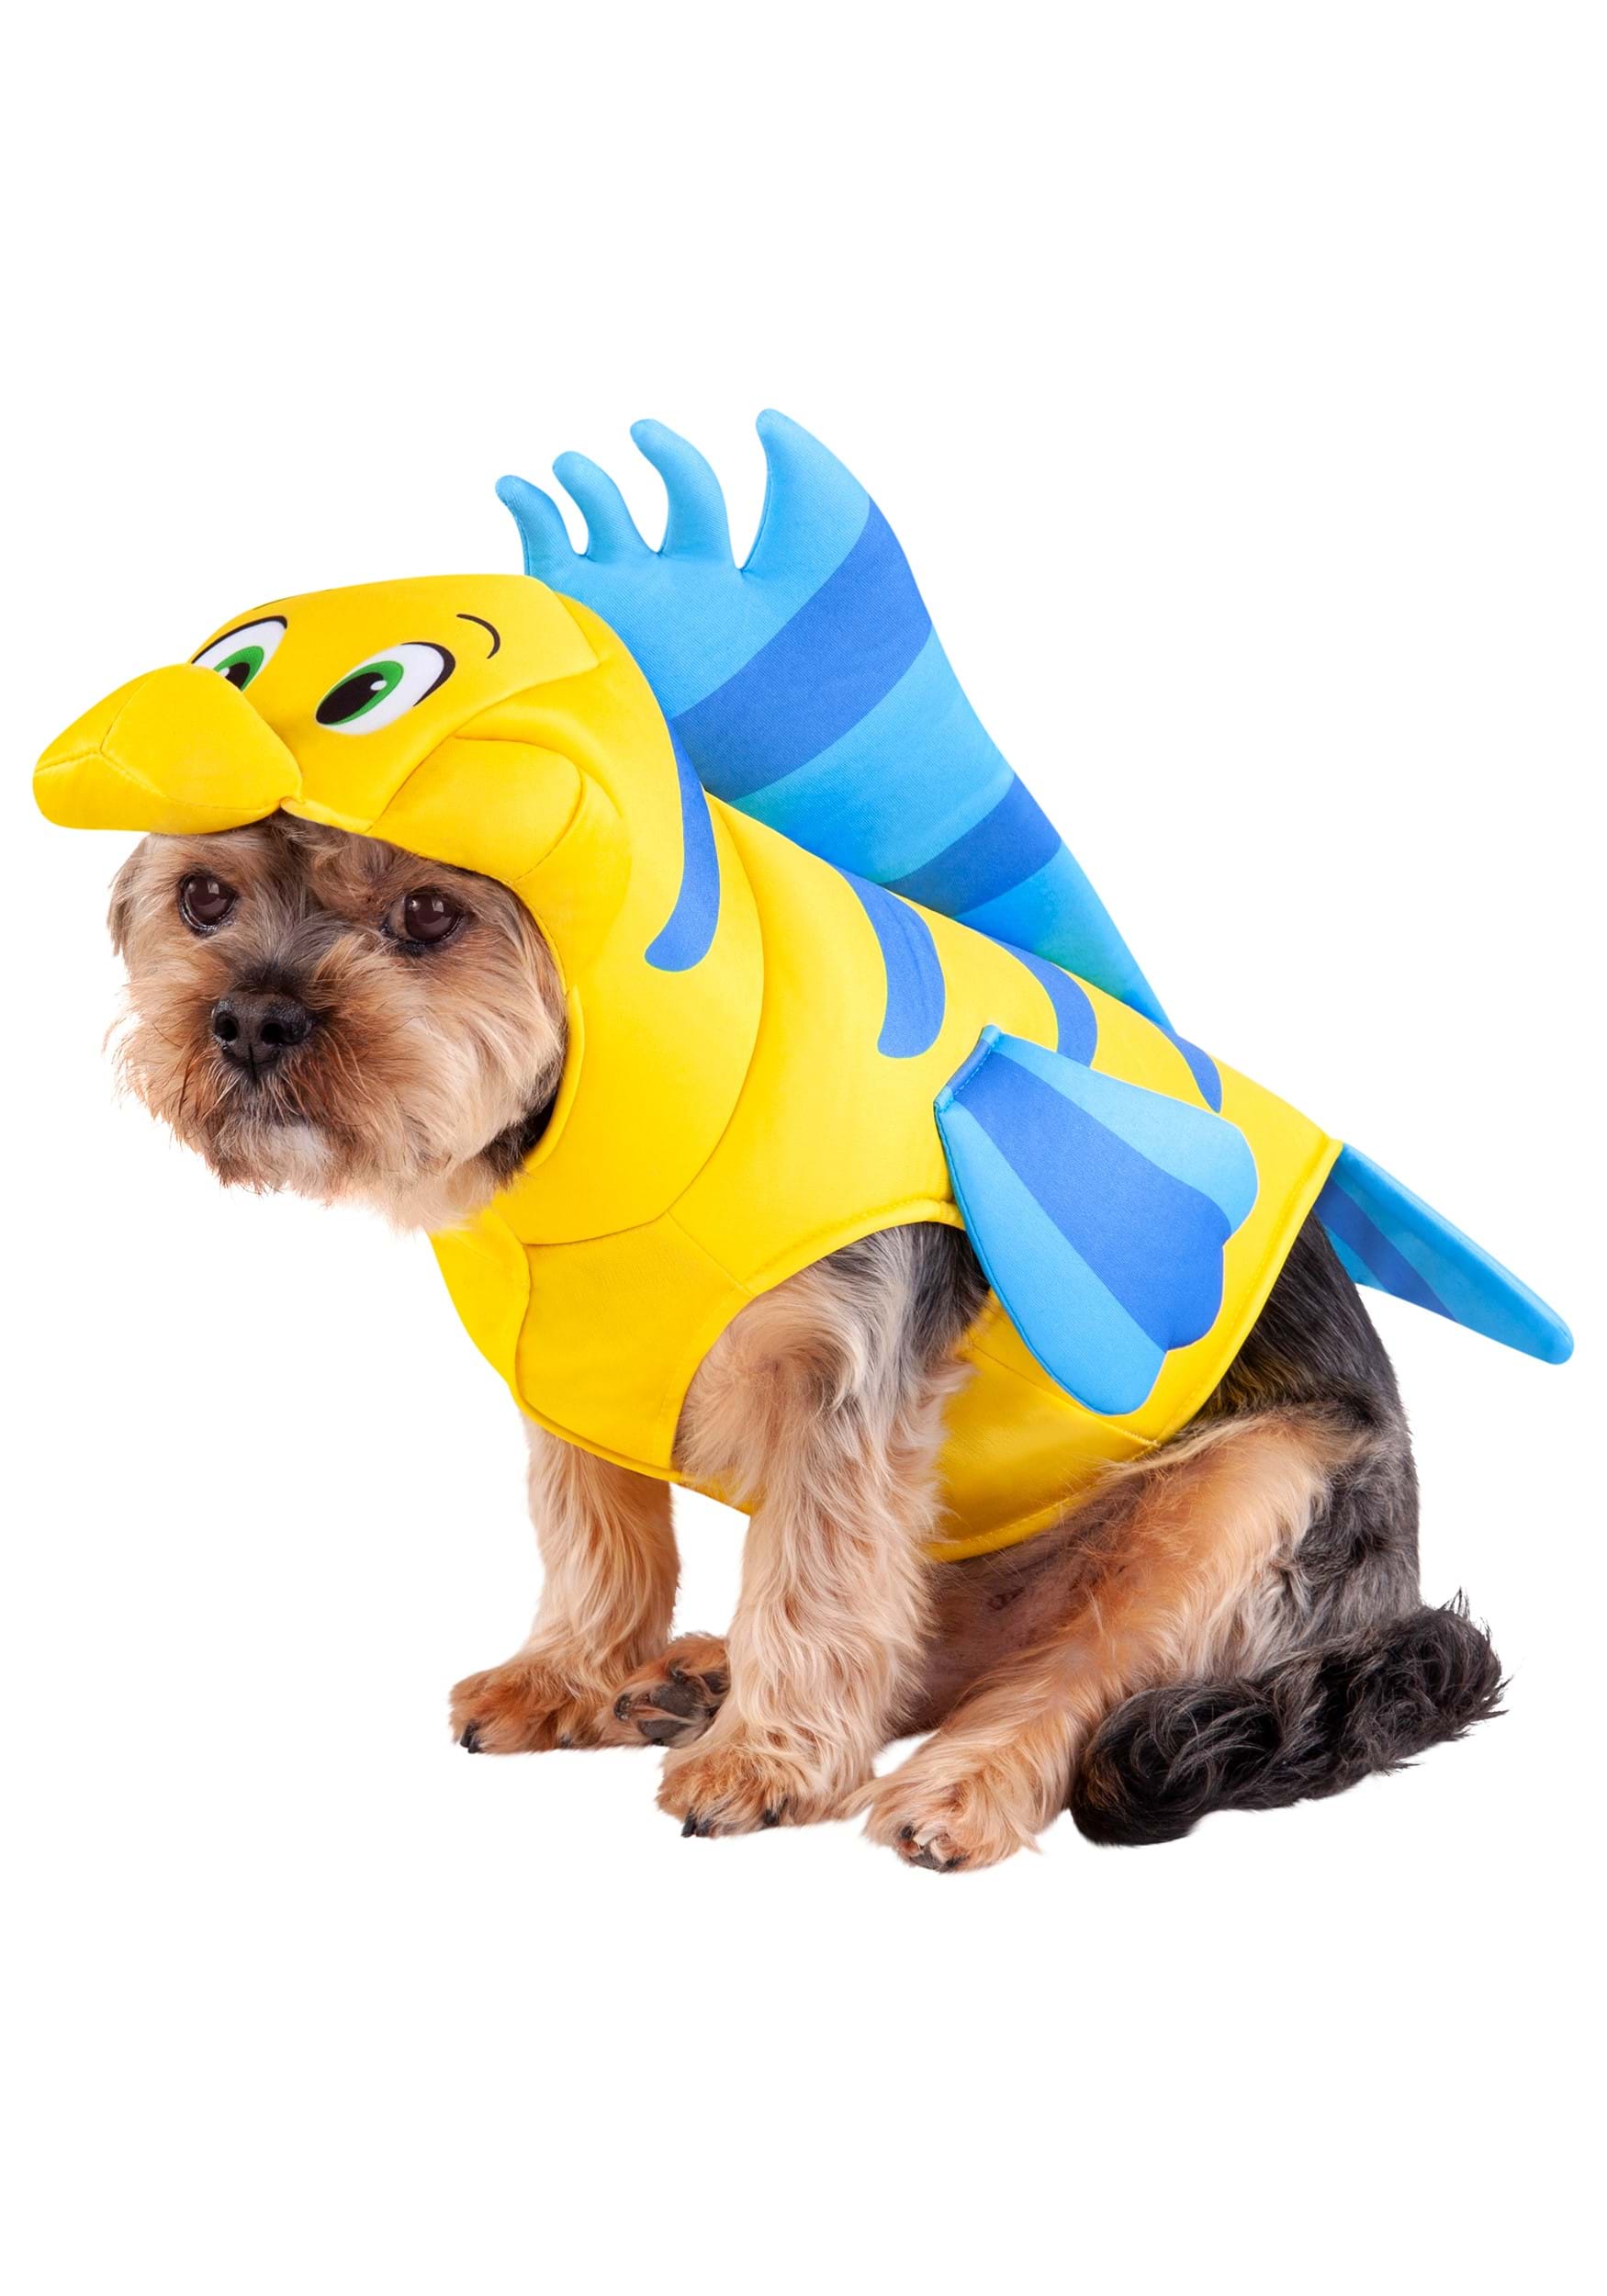 https://images.halloweencostumes.com/products/76262/1-1/disney-princess-flounder-dog-costume.jpg